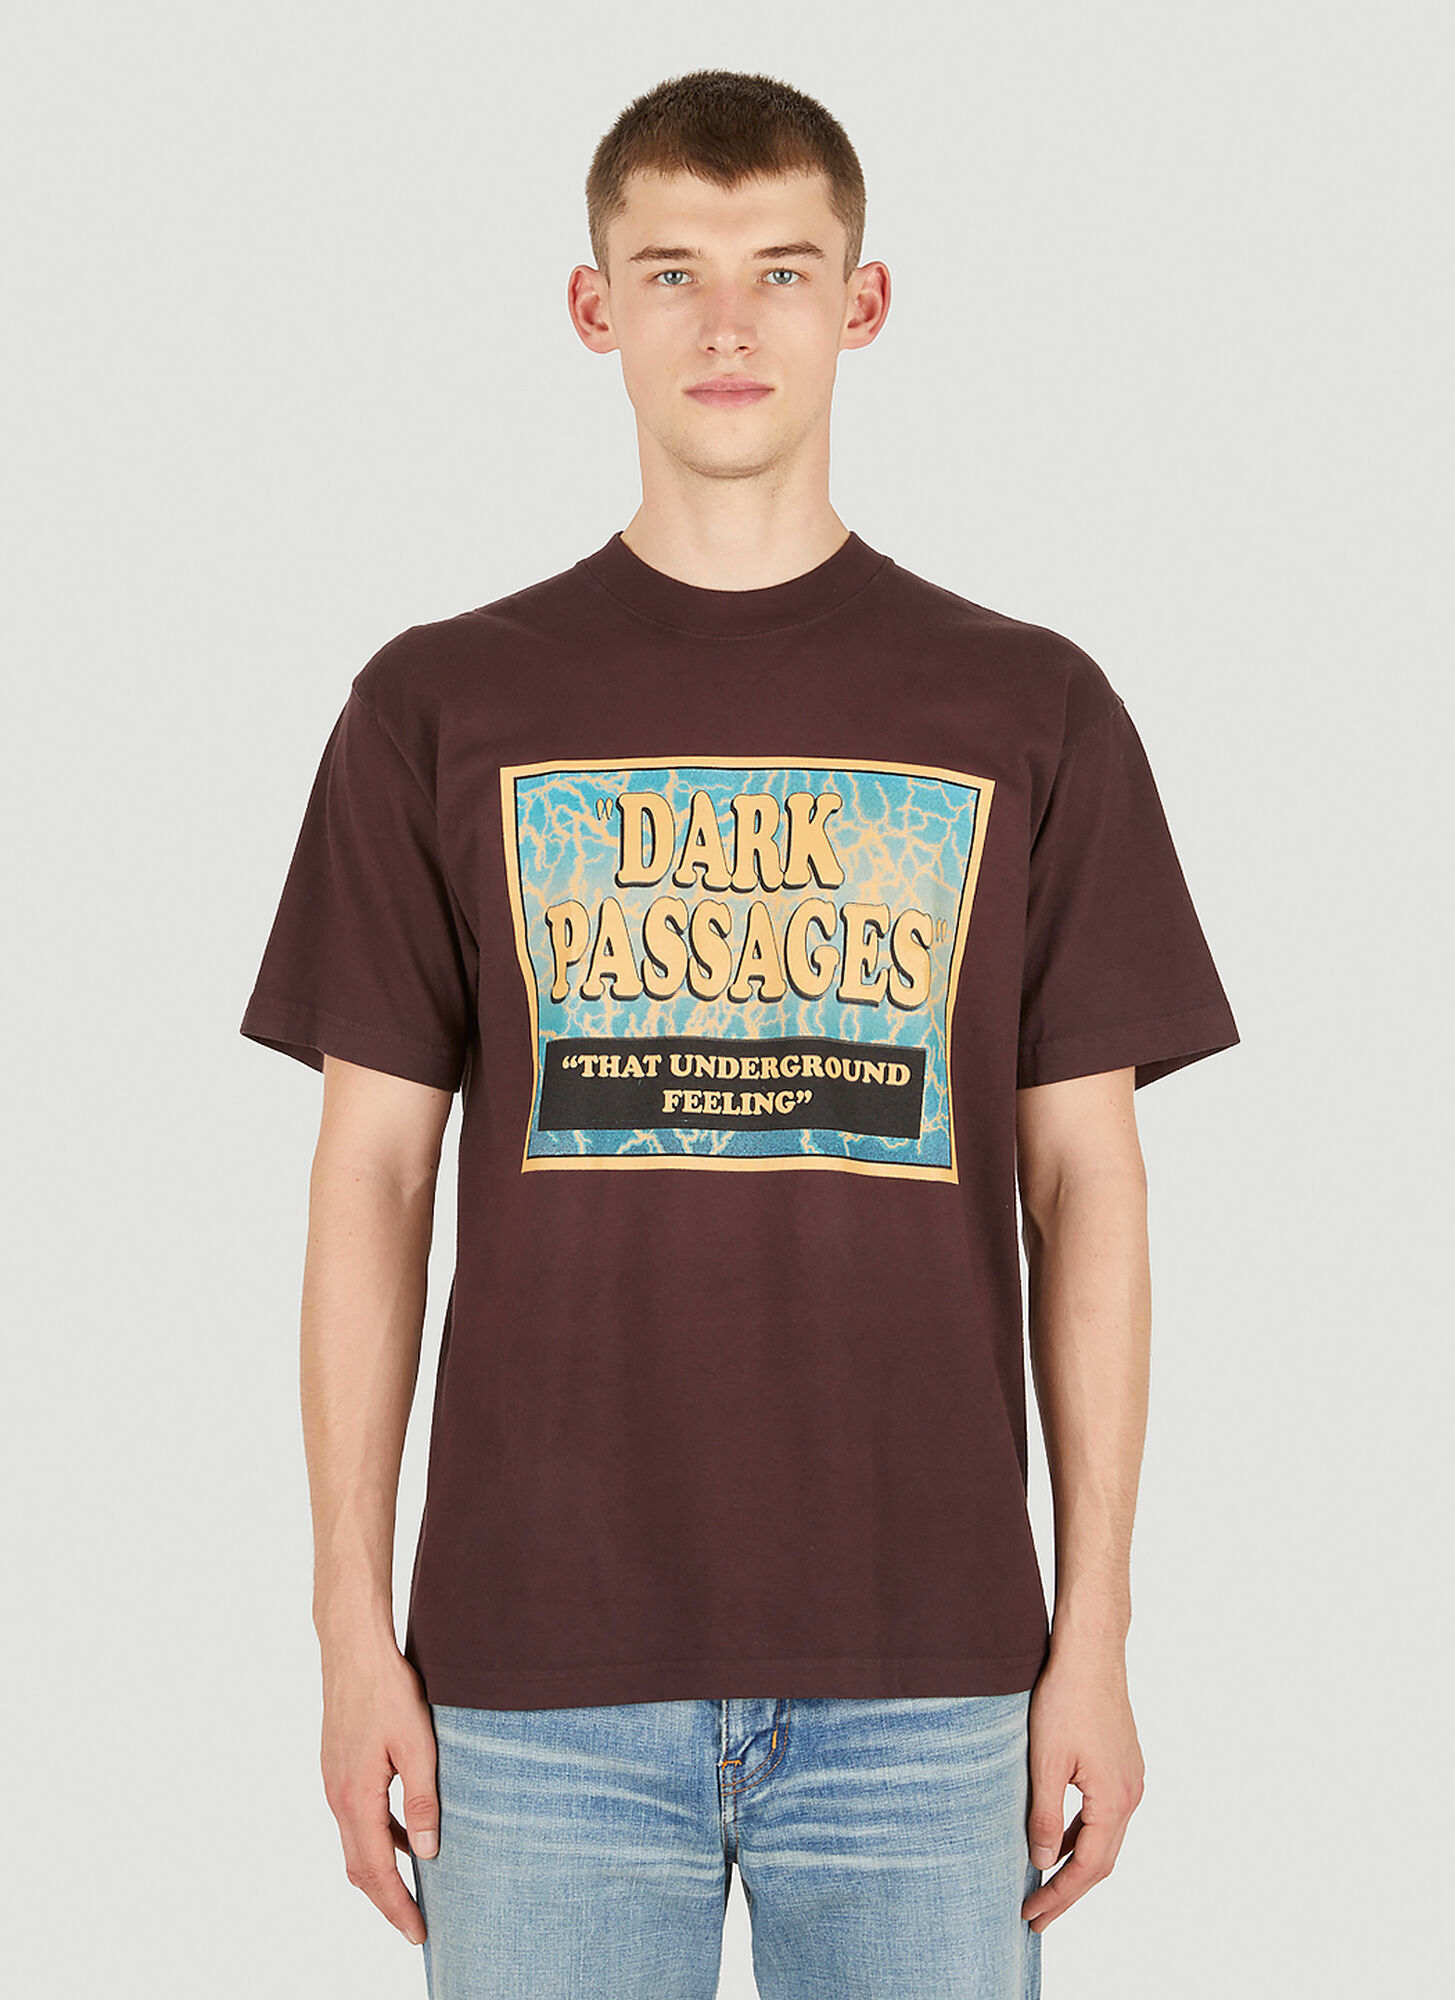 Come Tees Dark Passages Raver T-shirt Unisex Brown